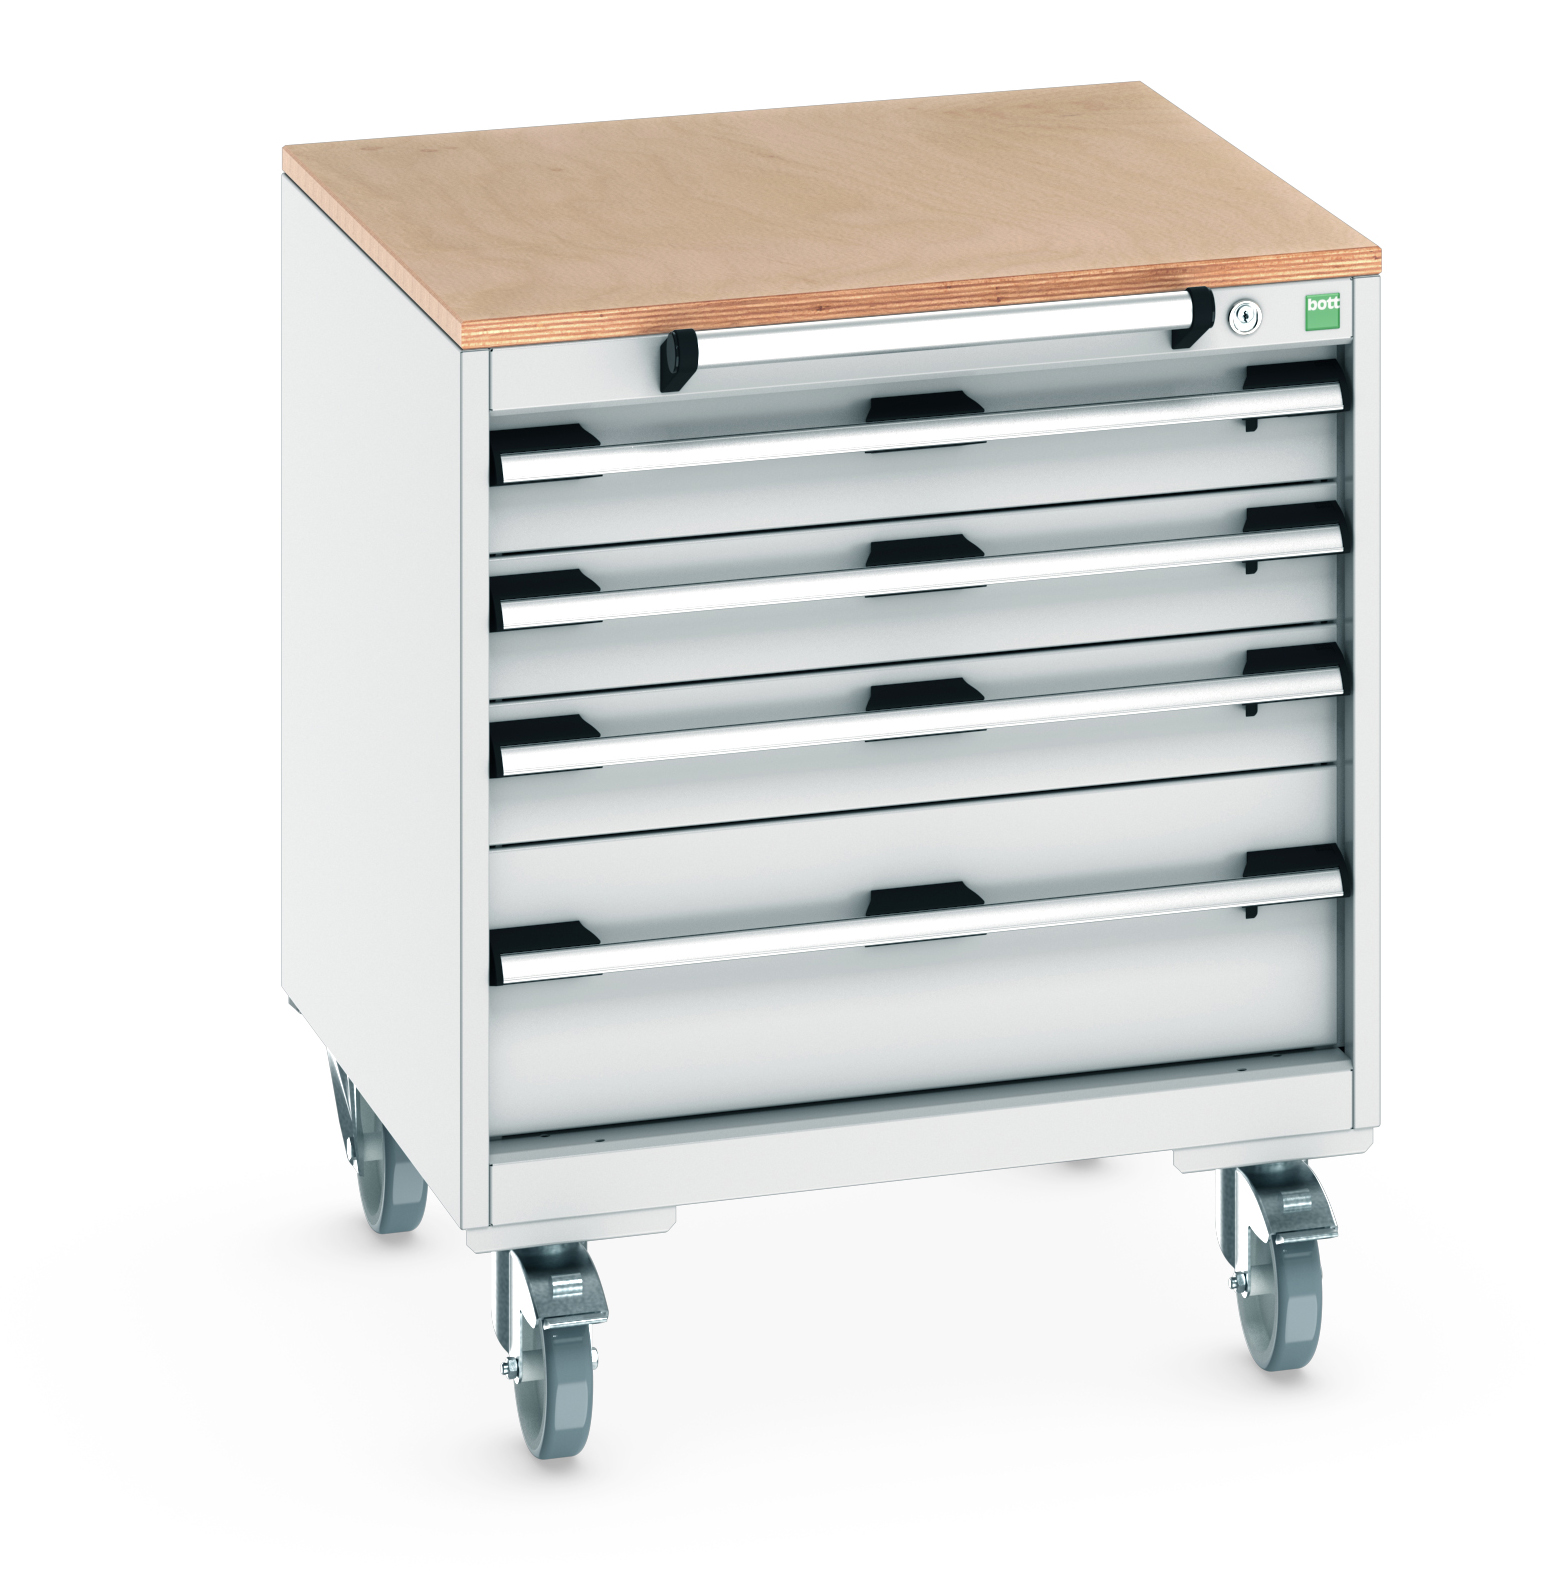 Bott Cubio Mobile Drawer Cabinet With 4 Drawers & Multiplex Worktop - 40402143.16V